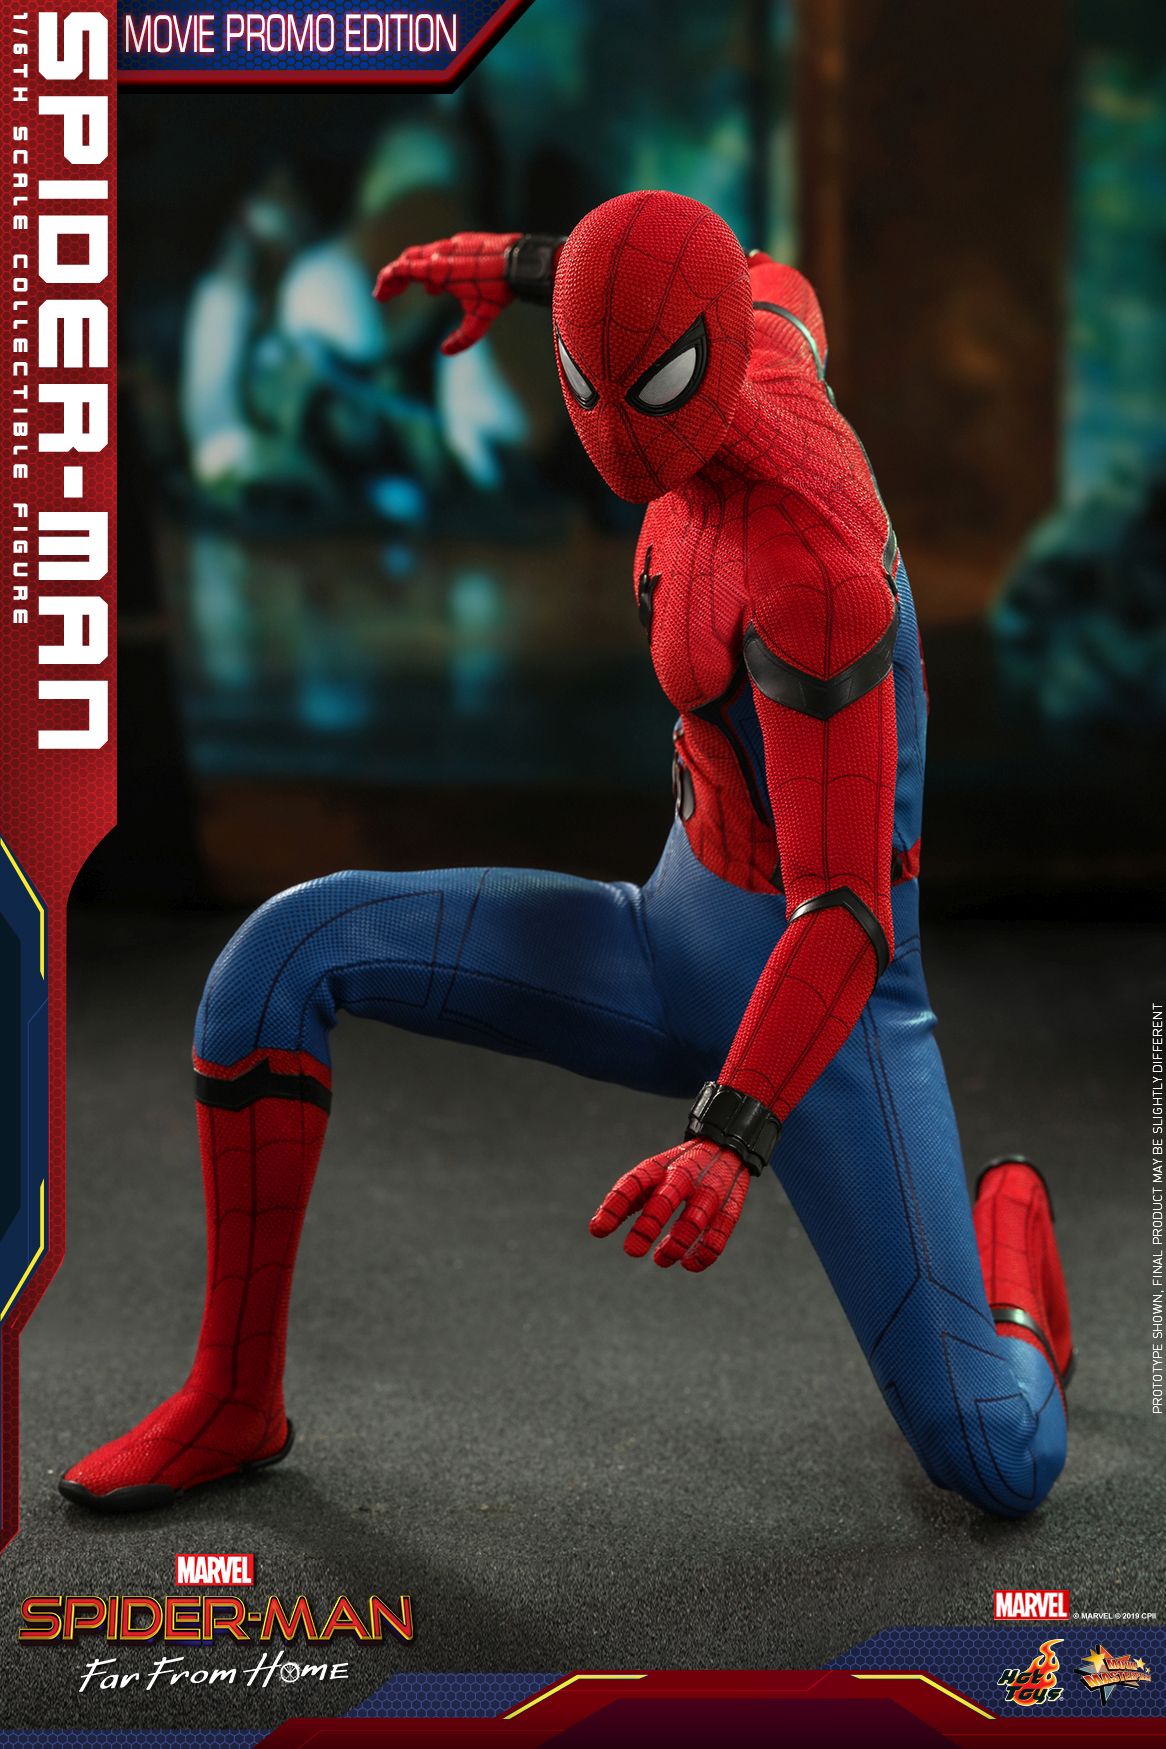 Hot Toys Smffh Spider Man Movie Promo Edition Collectible Figure_pr10